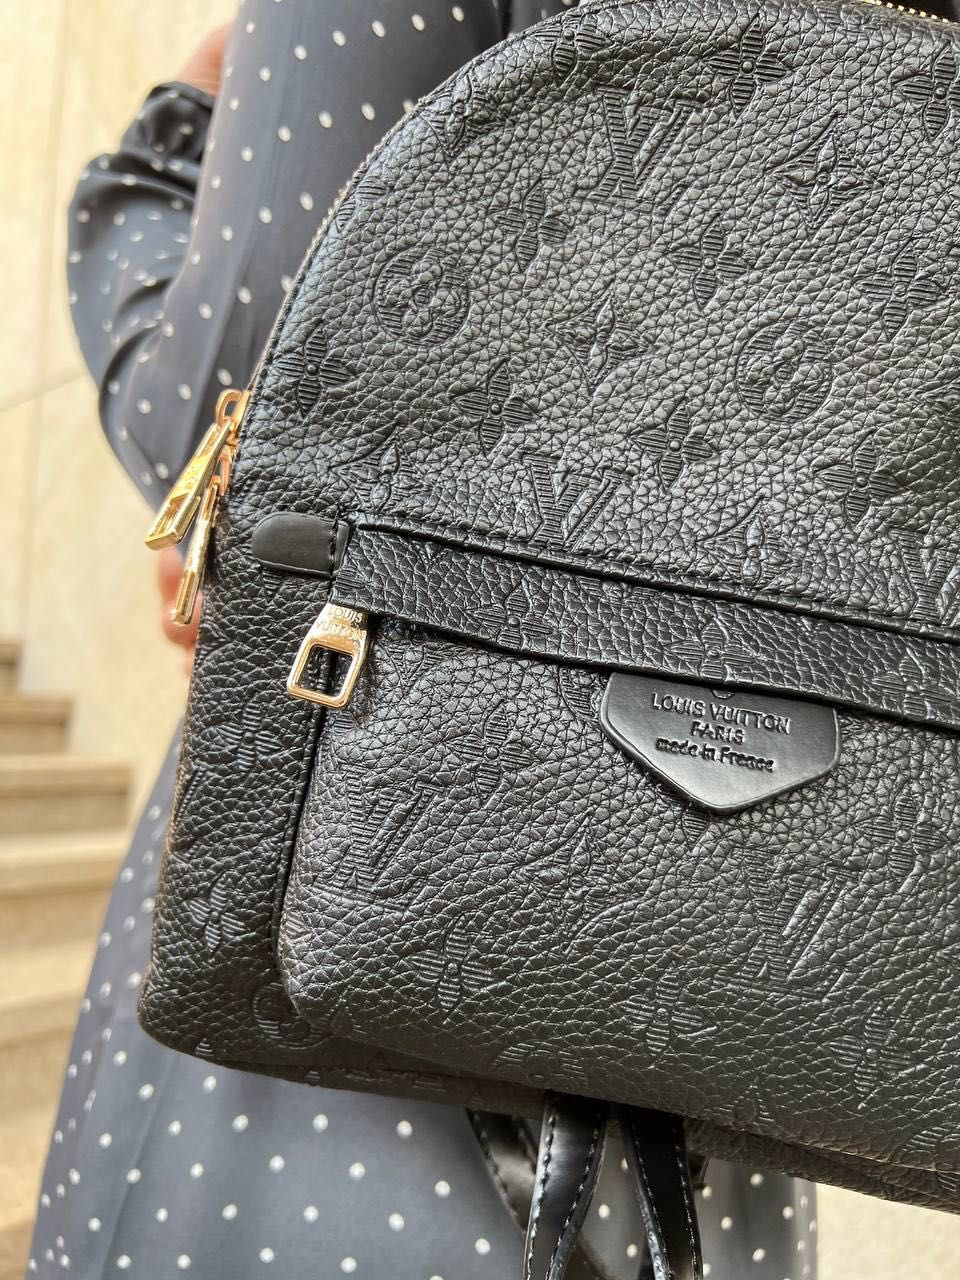 Нова з документами Louis Vuitton backpack сумка